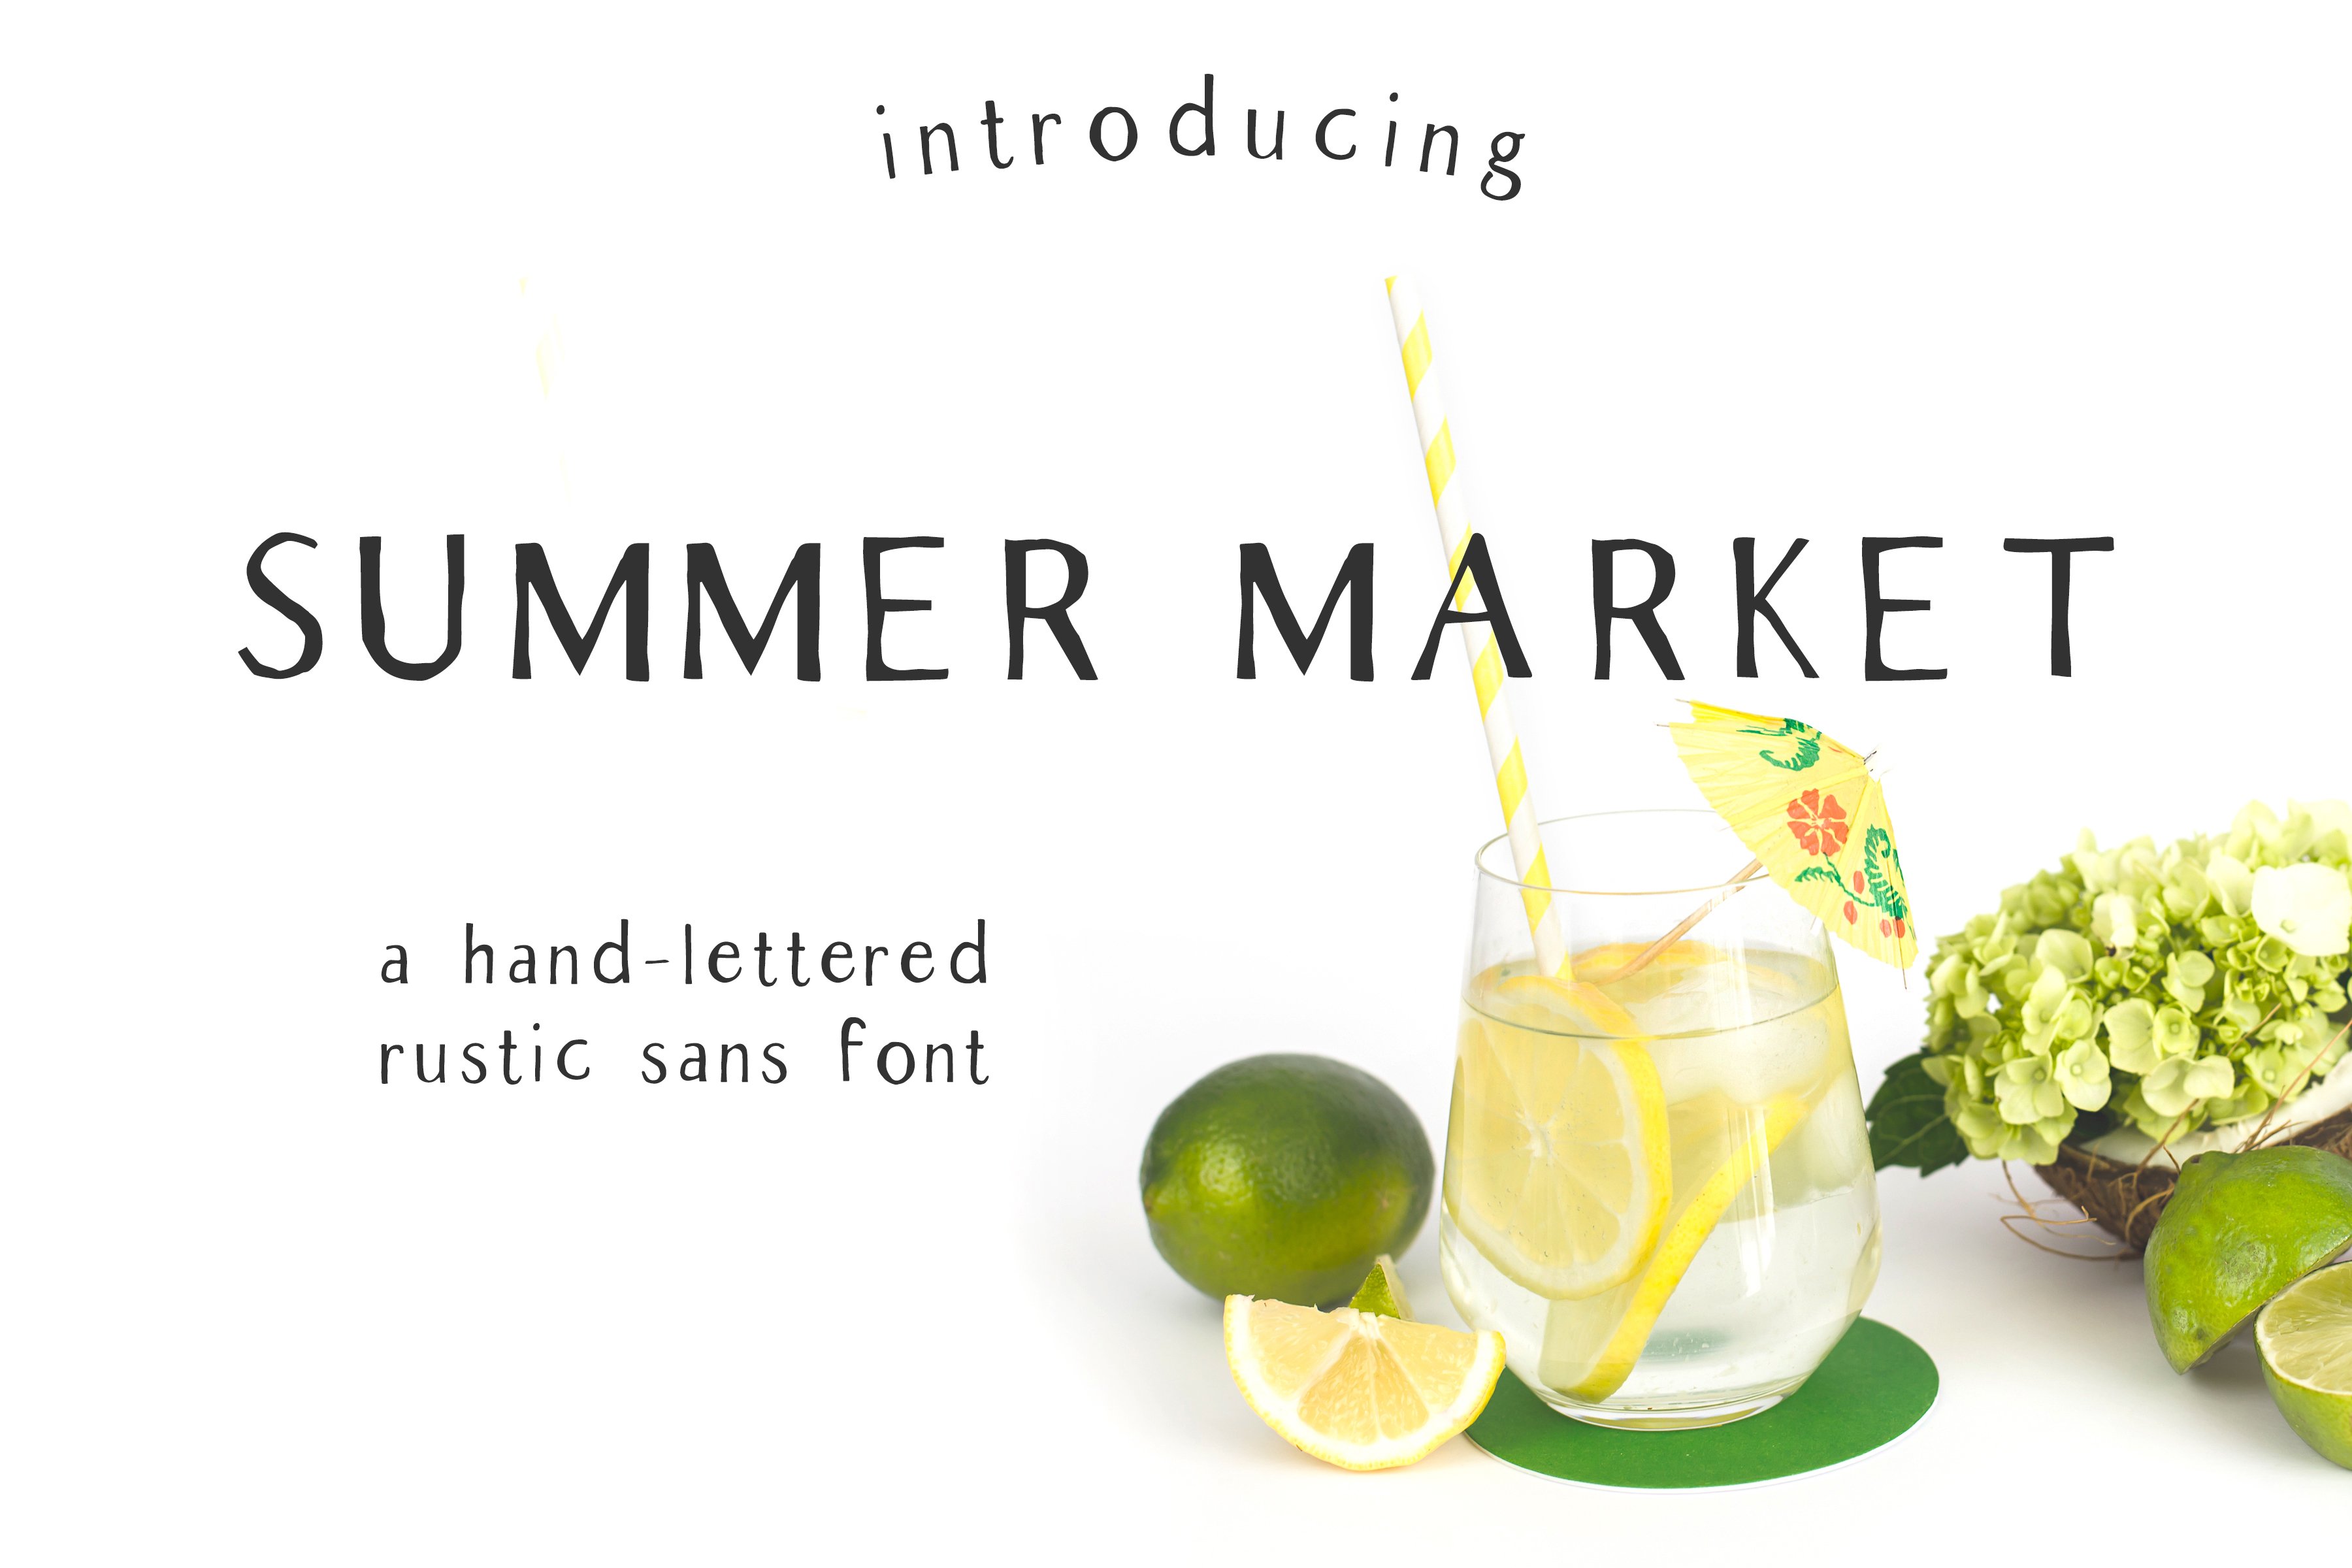 Summer Market - Rustic Font cover image.